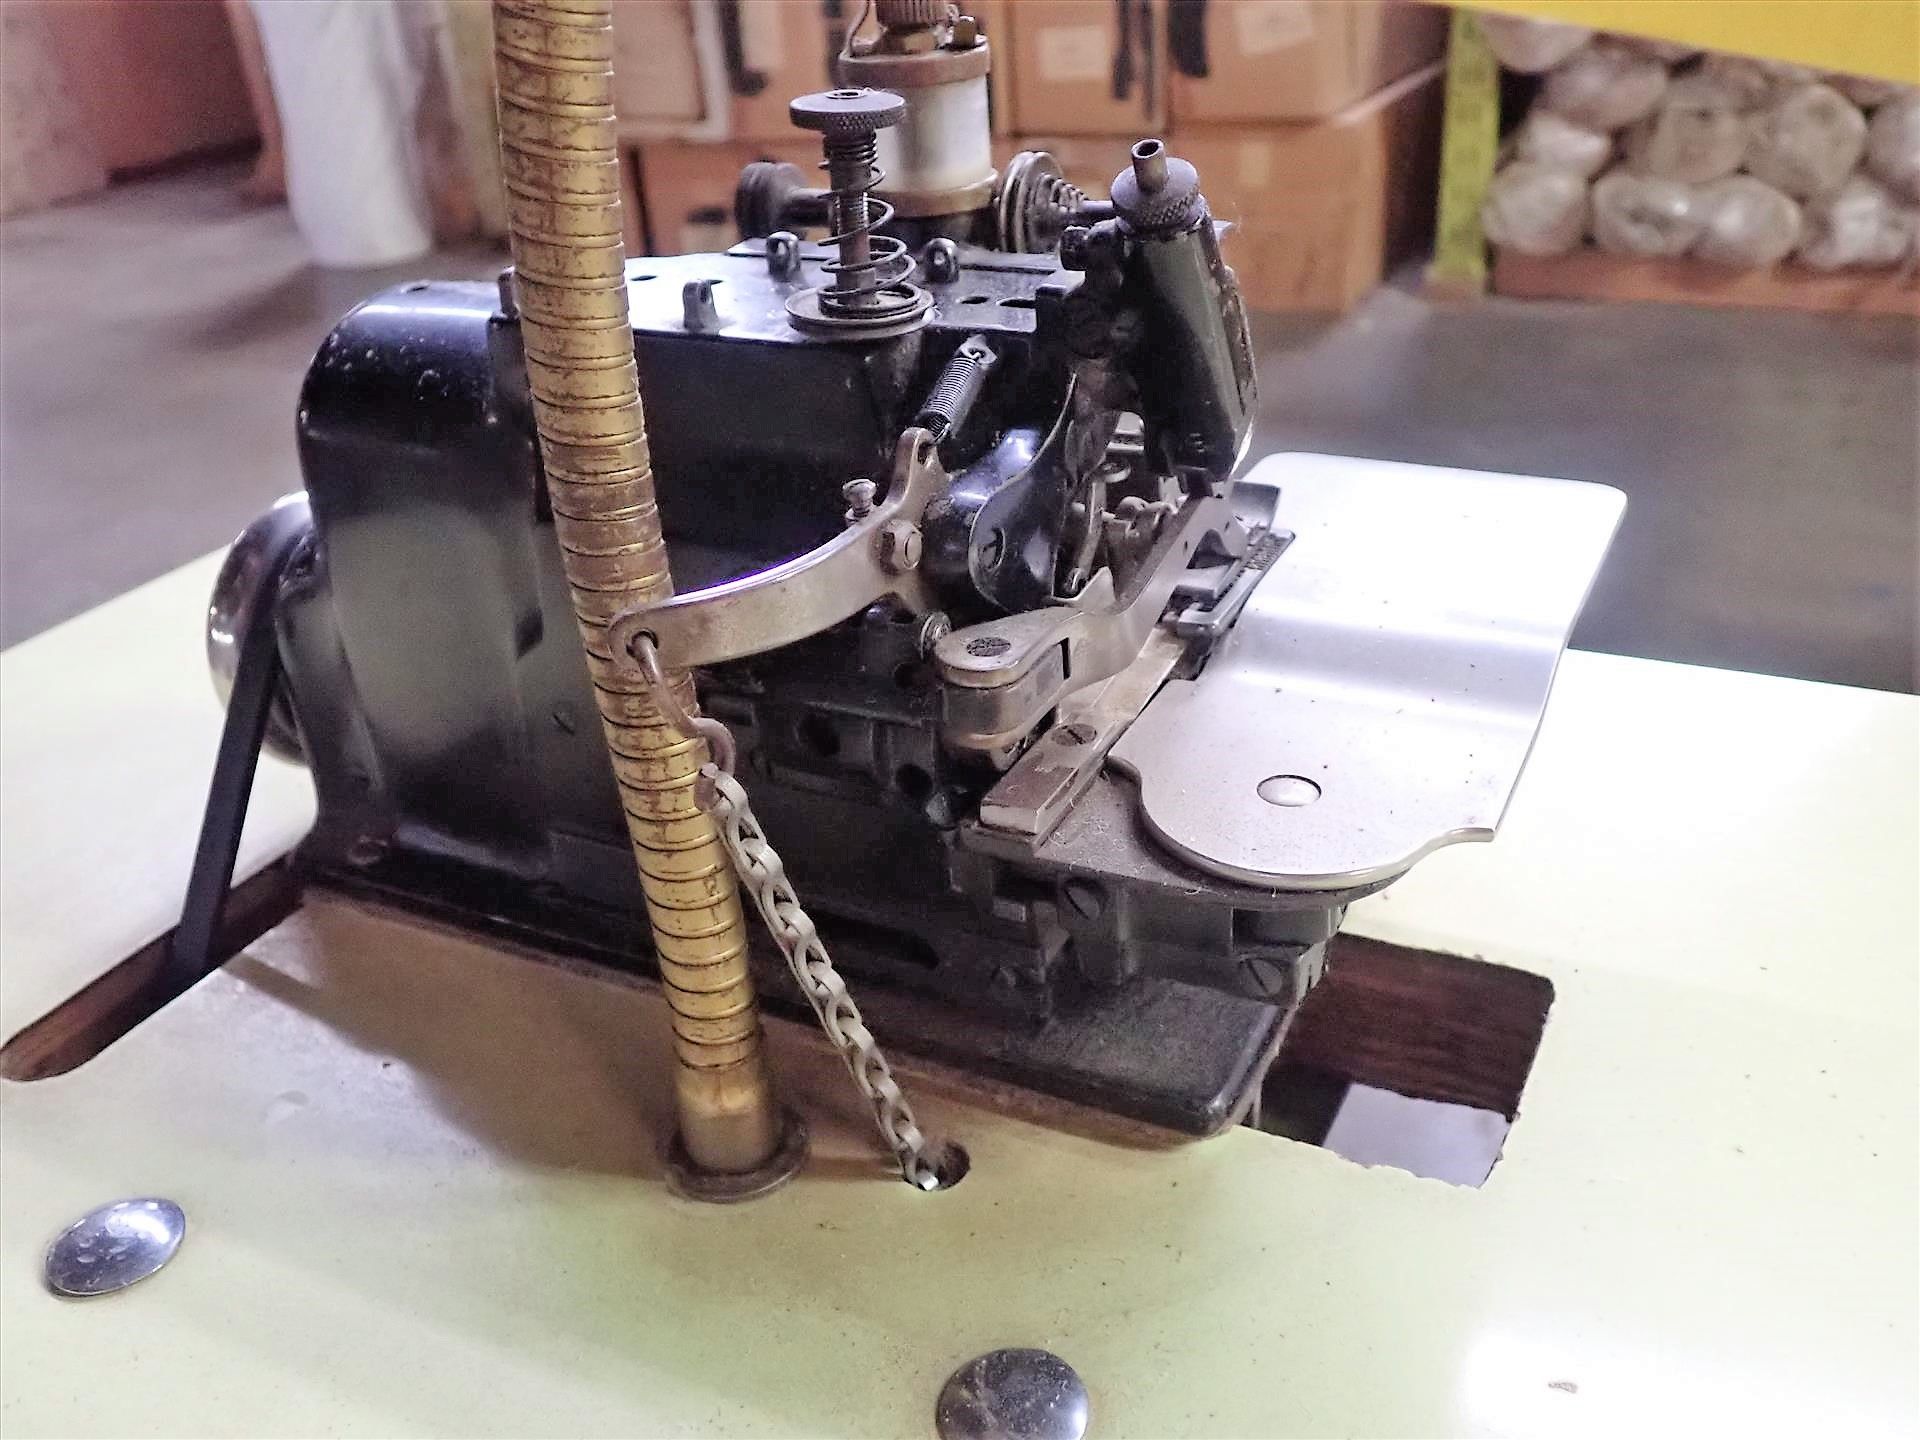 Merrow industrial overlock sewing machine, mod. A-3DW, S/N 88589 c/w 20 in. x 48 in. industrial - Image 3 of 6